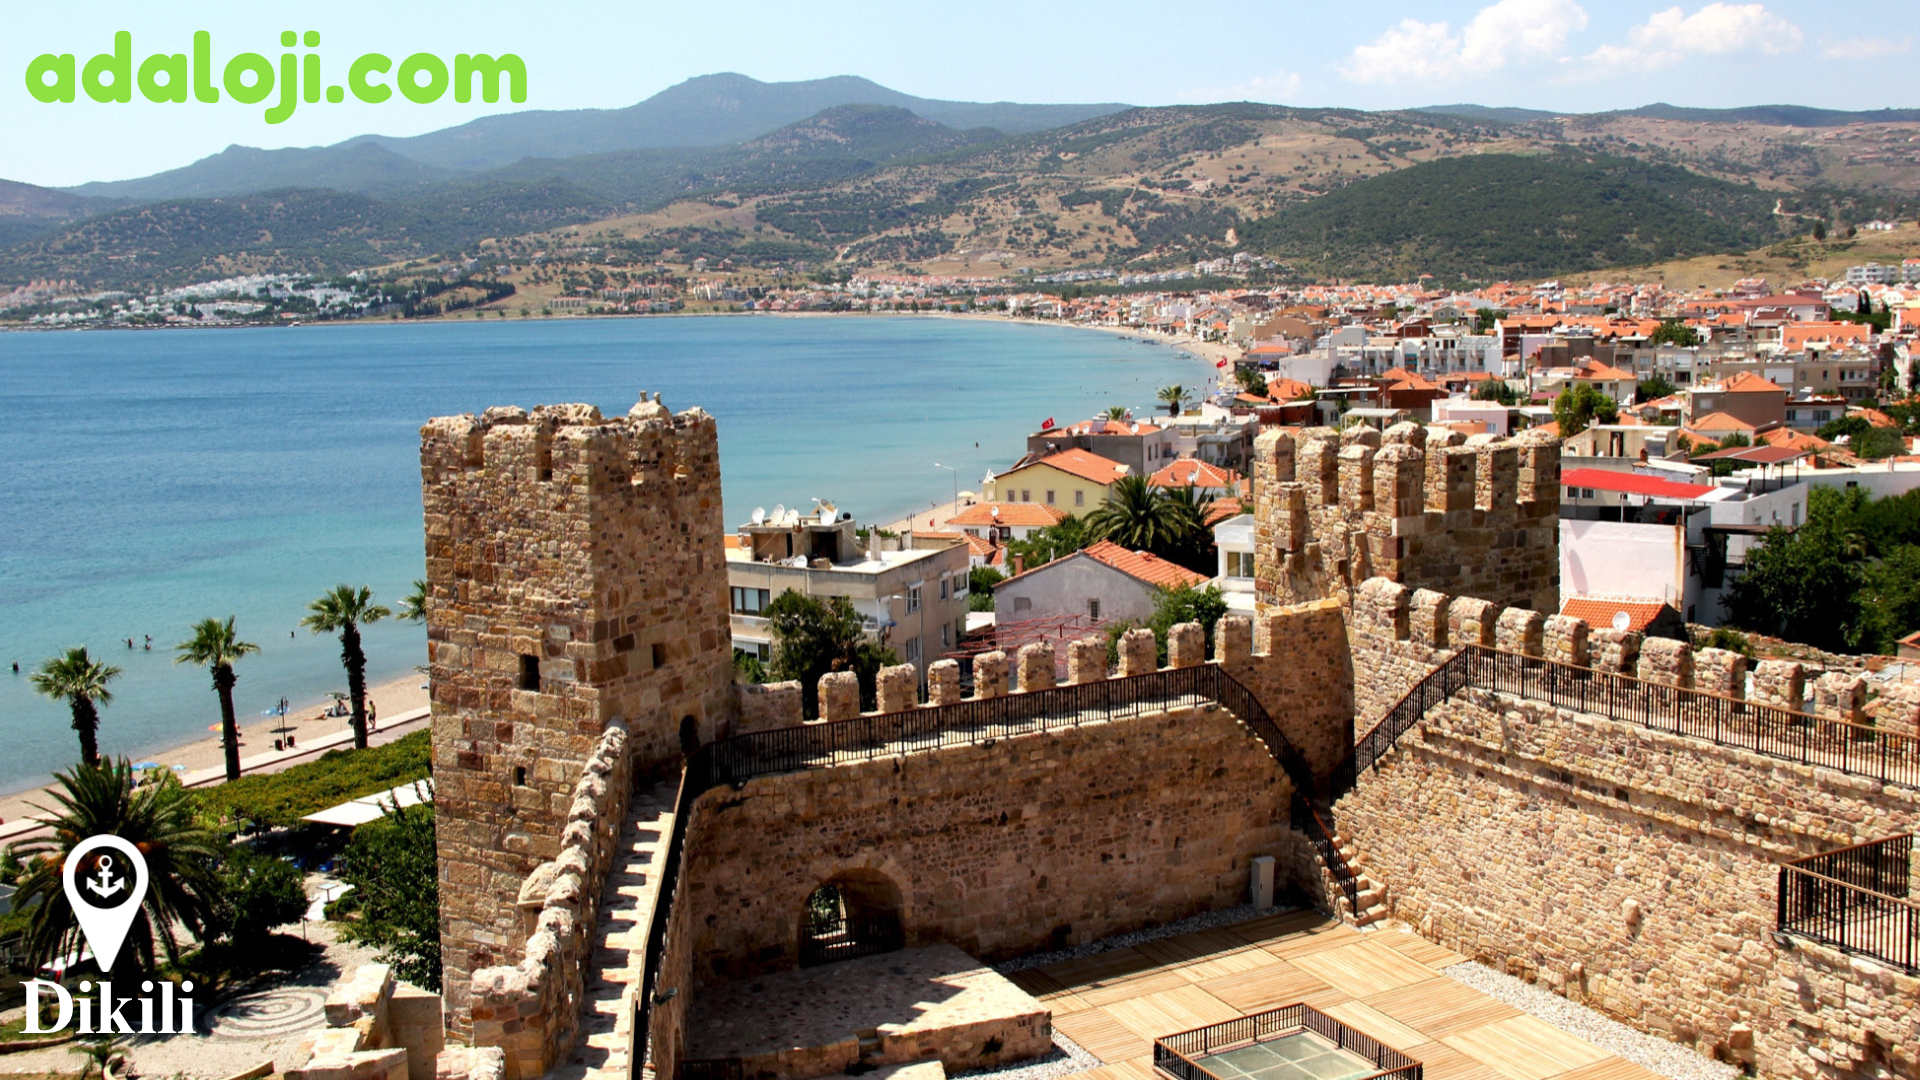 Dikili - Your Gateway to the Aegean Sea.